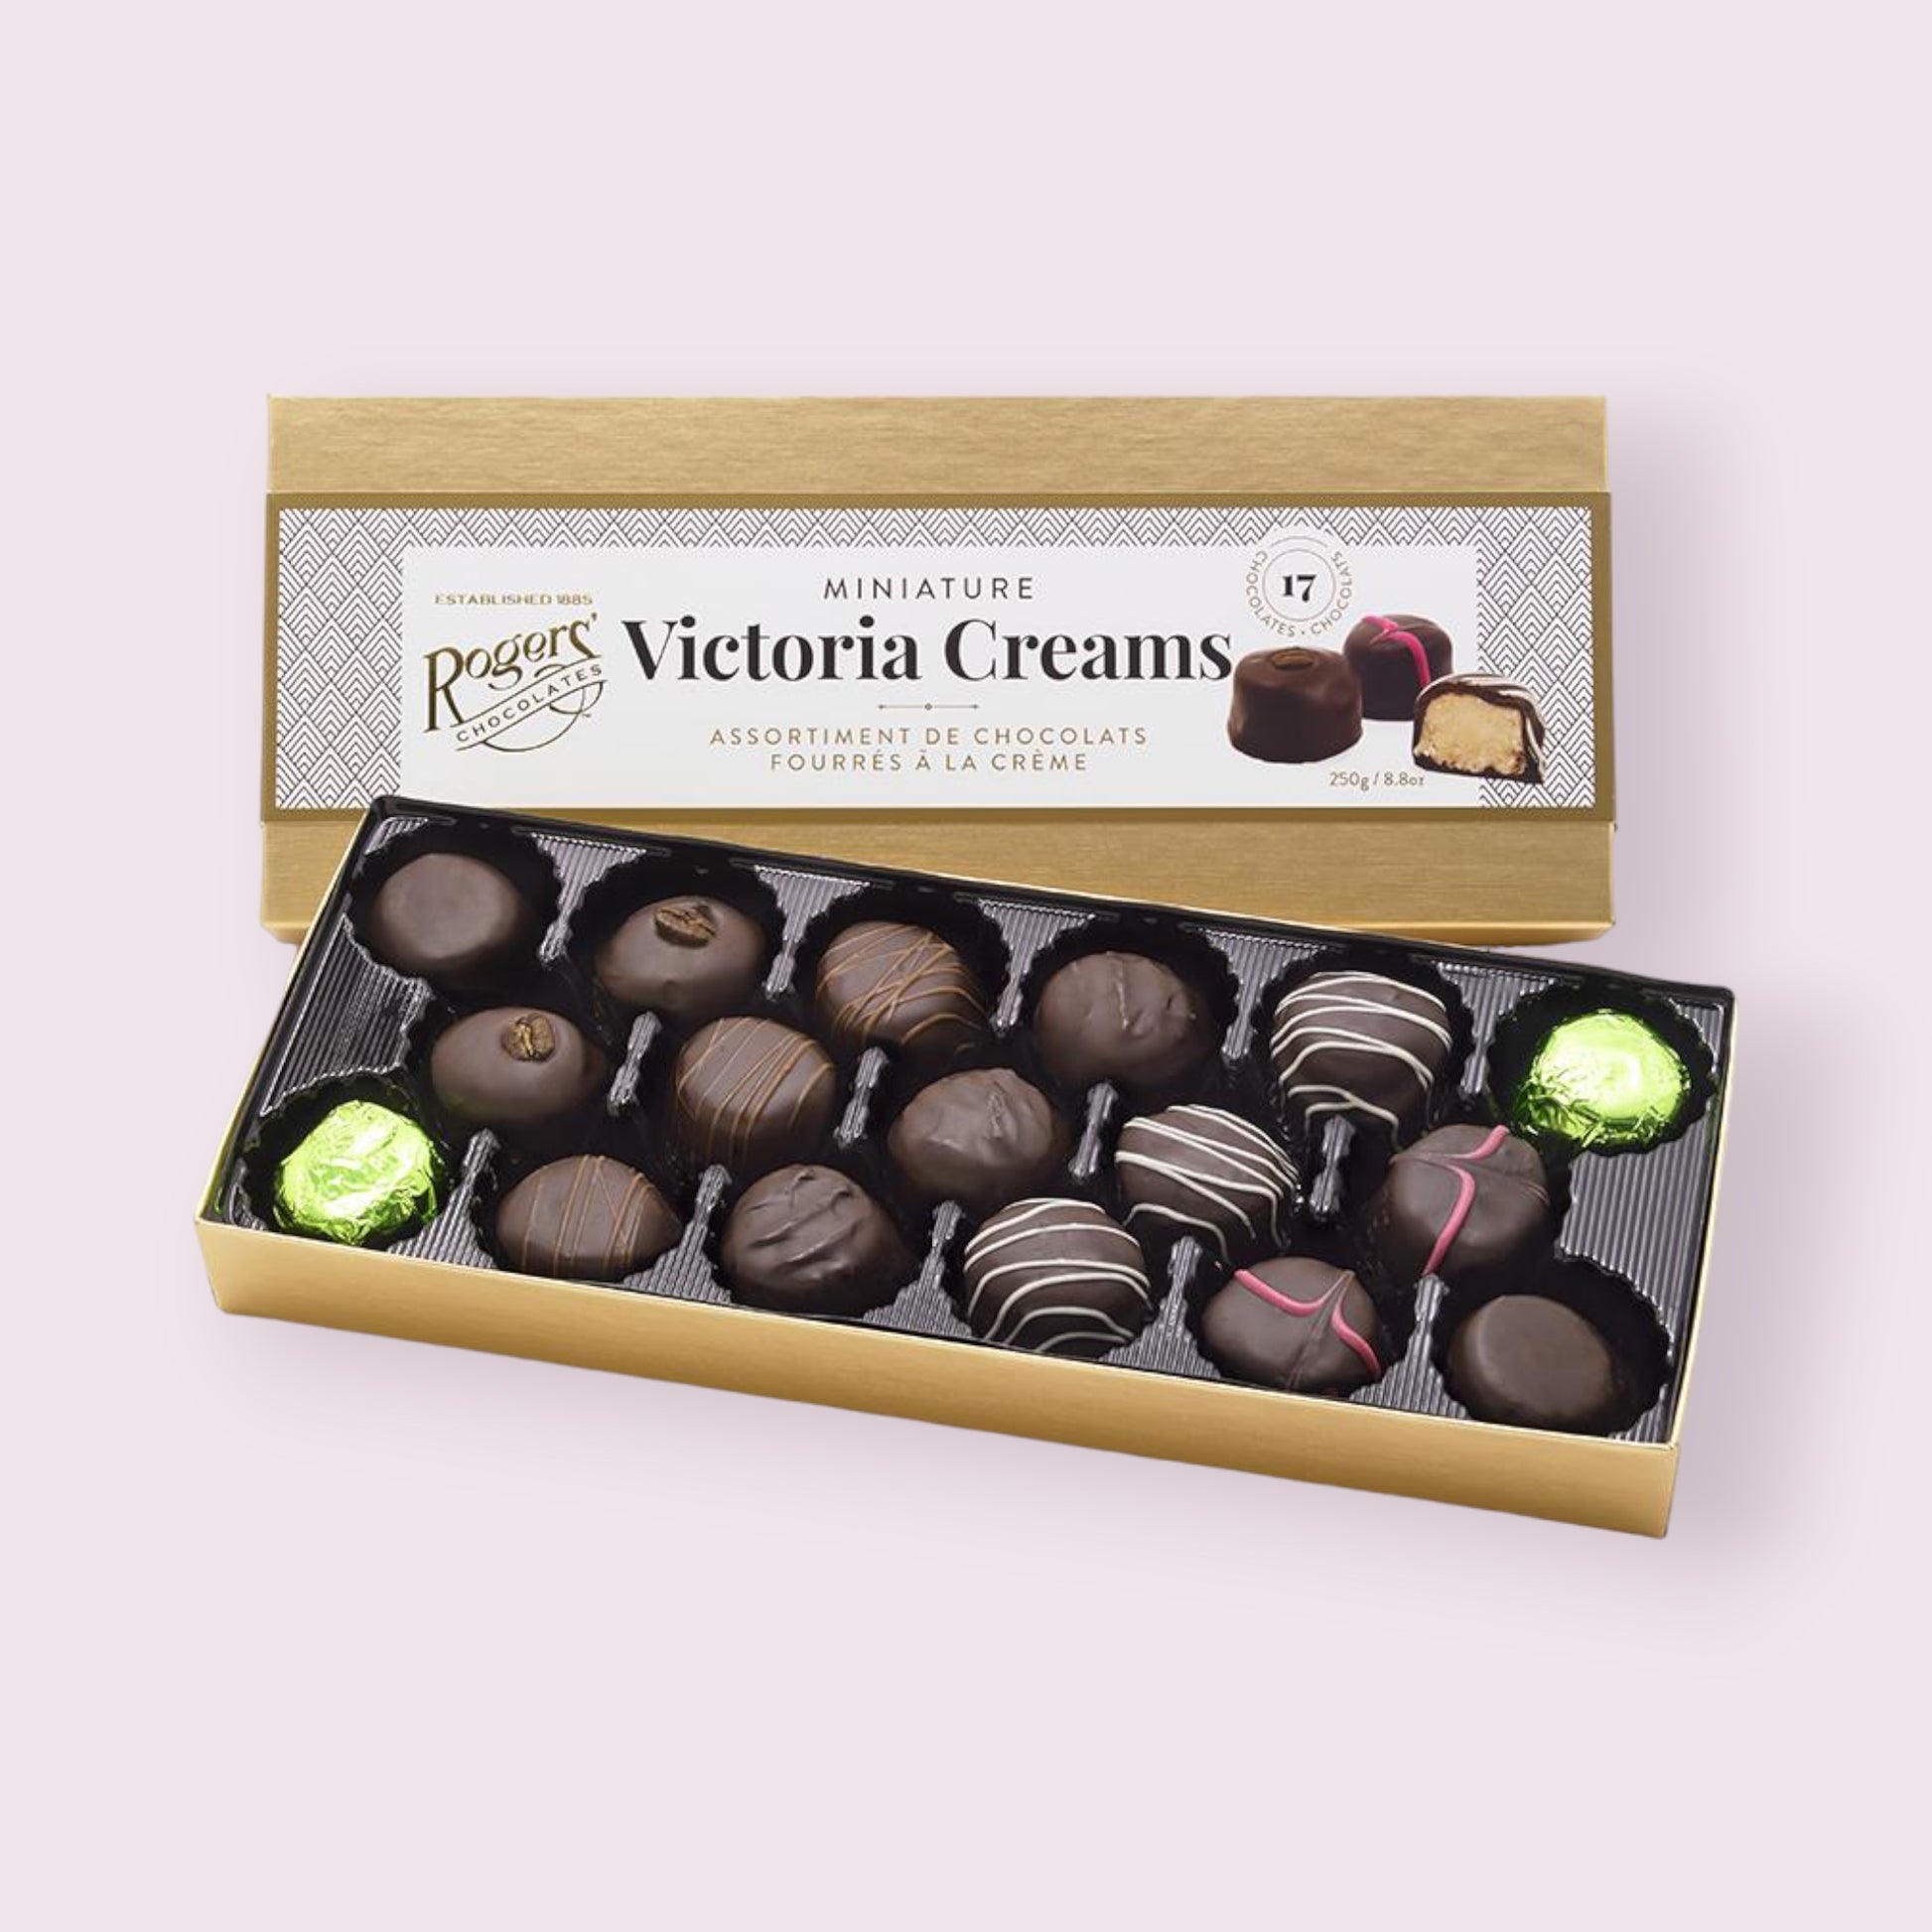 Roger's Miniature Victoria Creams Box Chocolate Pixie Candy Shoppe   